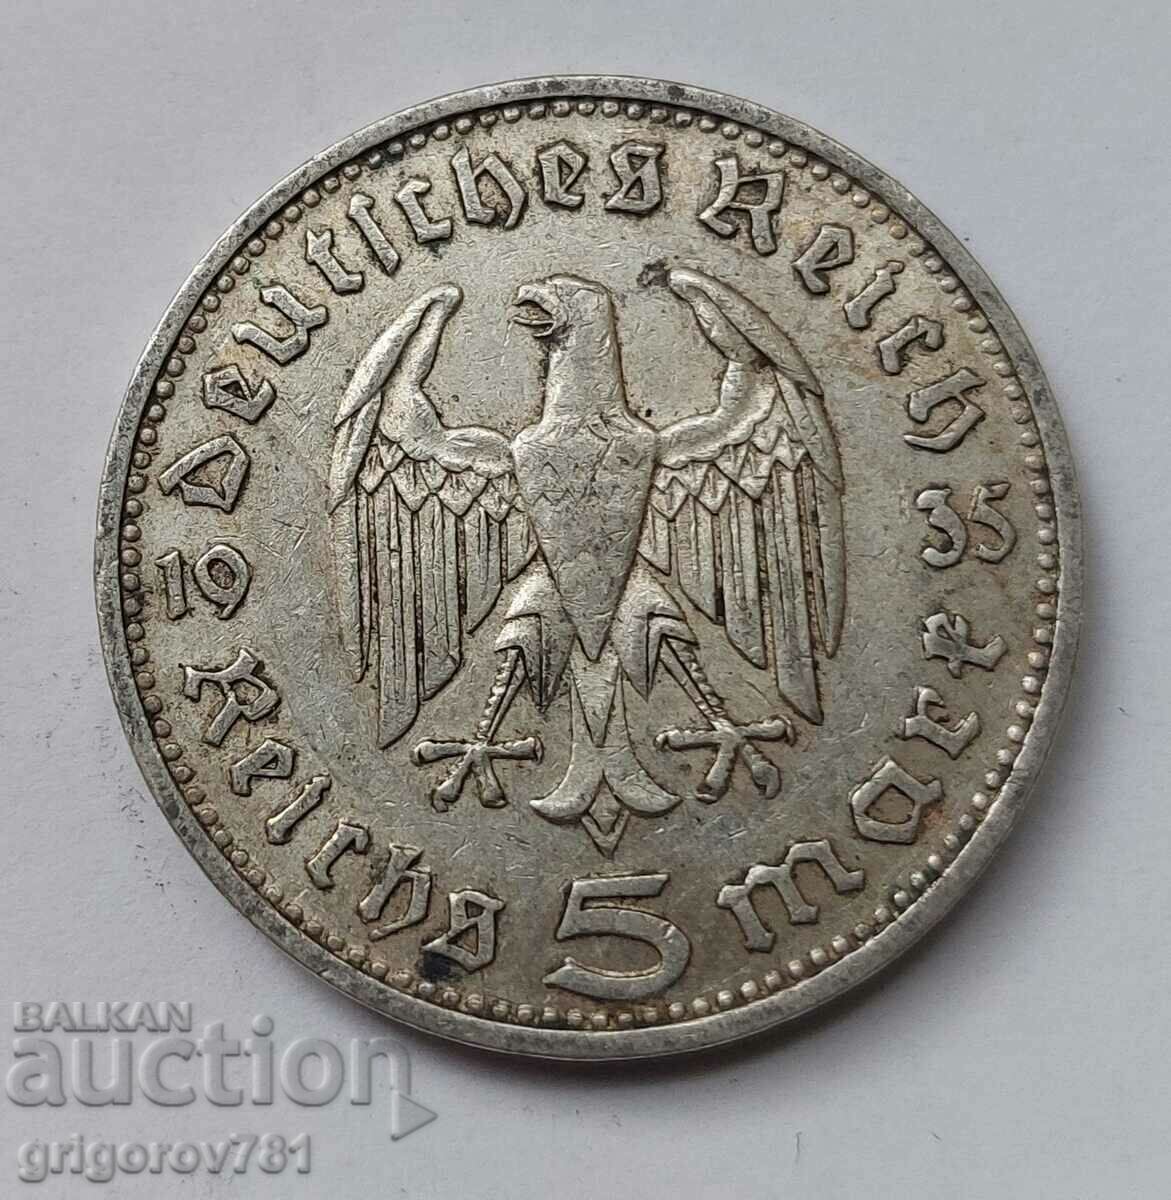 5 Mark Silver Γερμανία 1935 D III Reich Ασημένιο νόμισμα #58